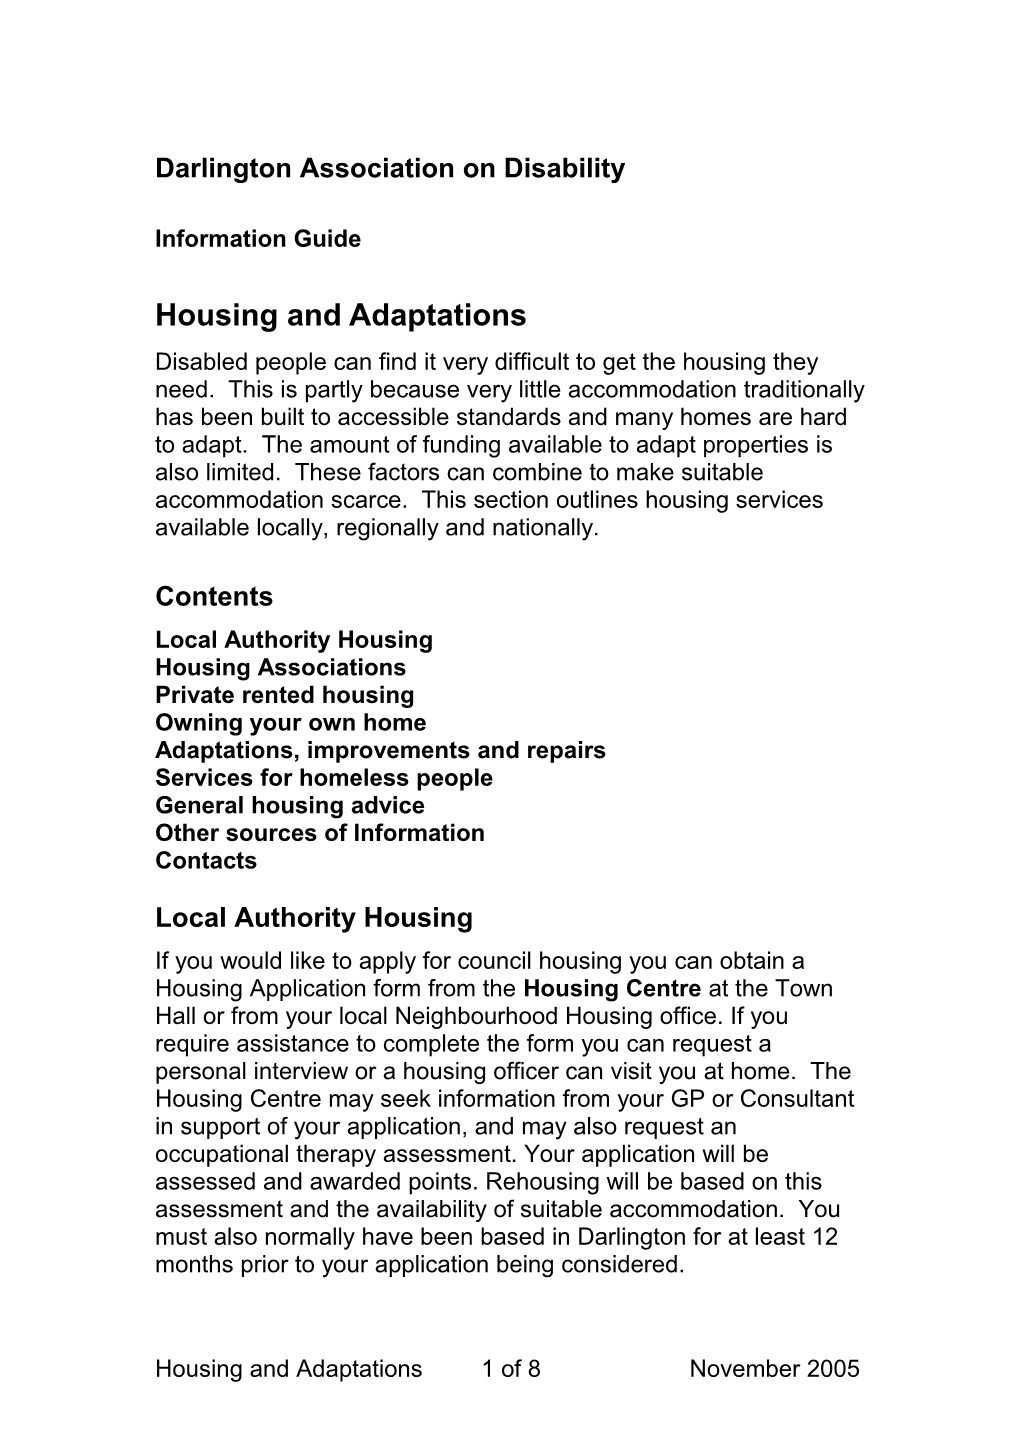 Housing and Adaptations